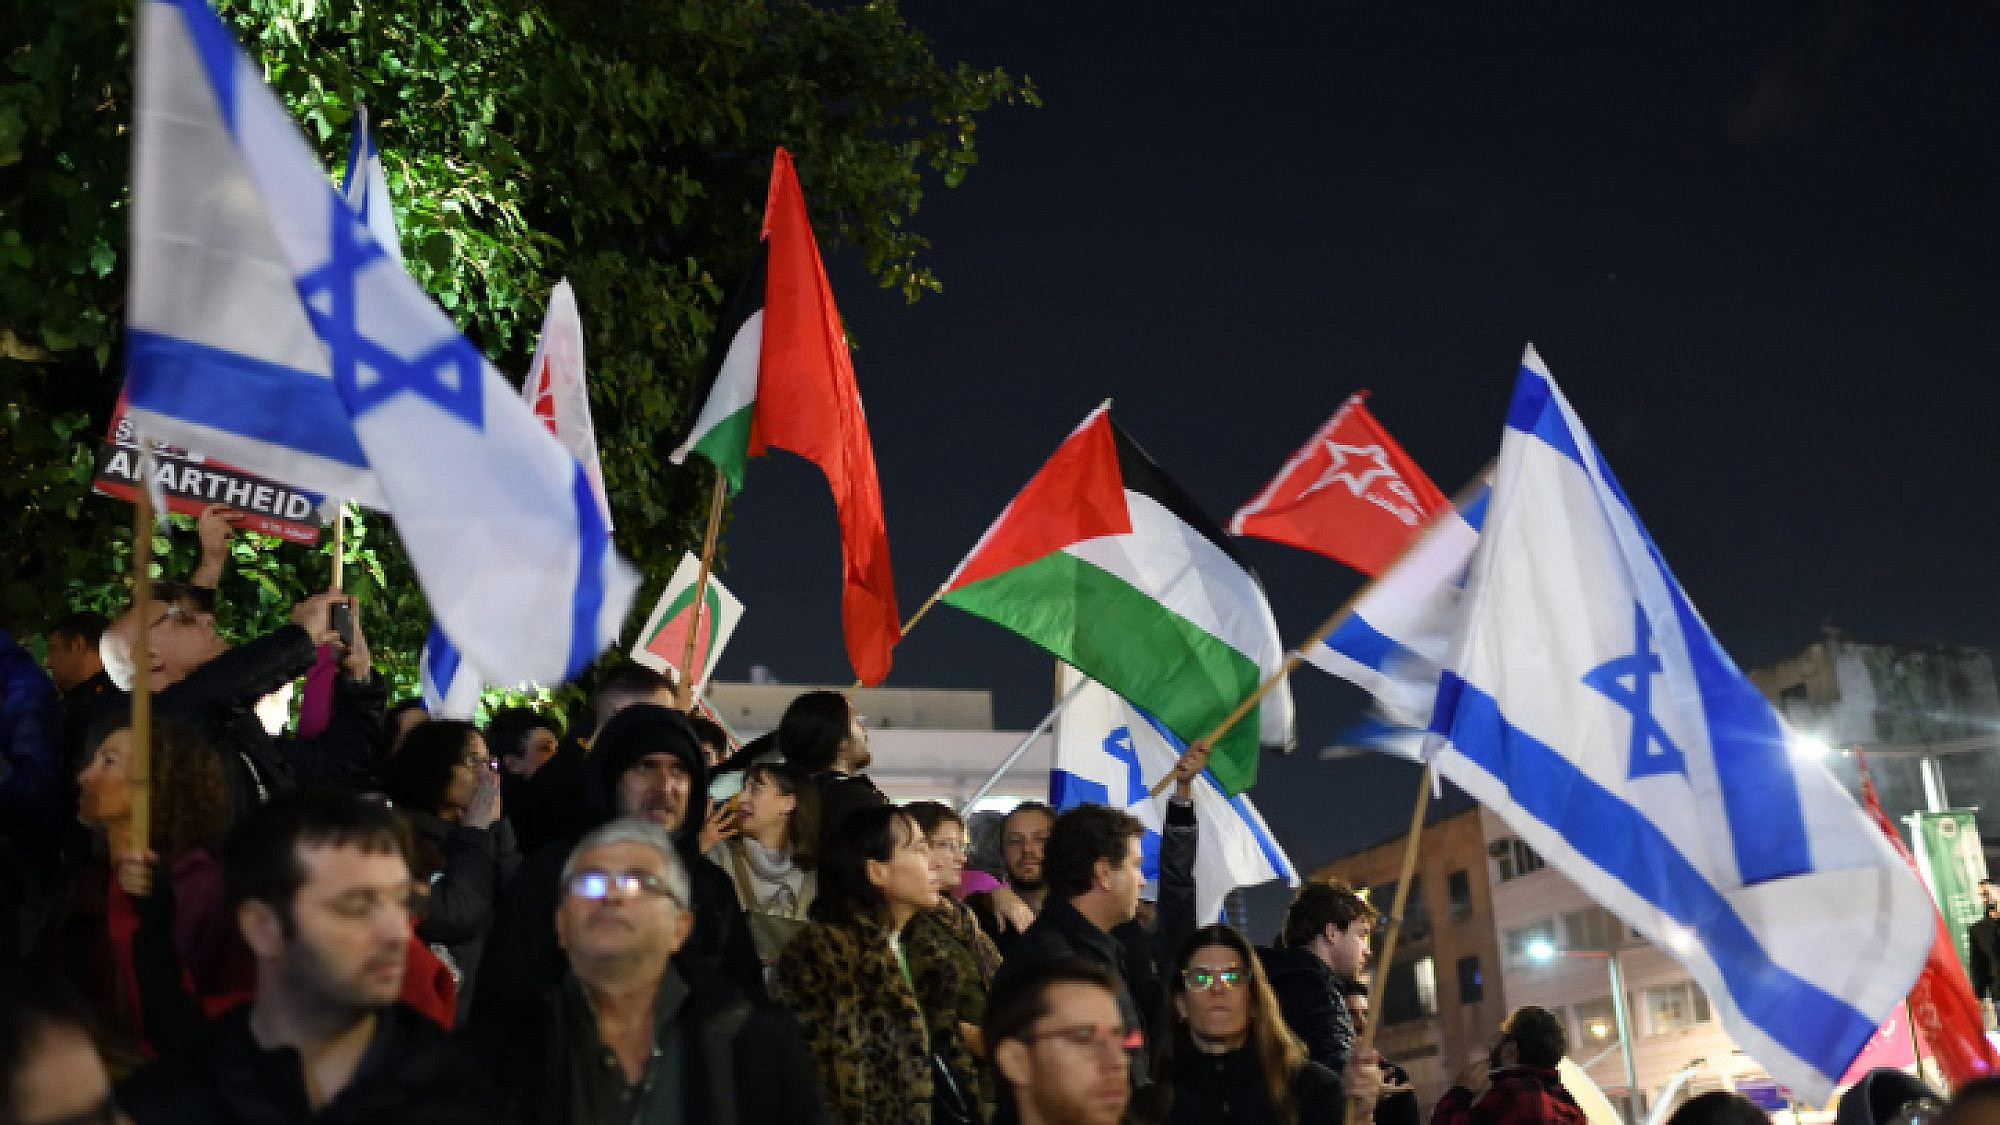 Palestinian flags waved at the rally against Israeli Prime Minister Benjamin Netanyahu's judicial reforms in Tel Aviv, Jan. 14, 2023. Photo by Gili Yaari /Flash90.